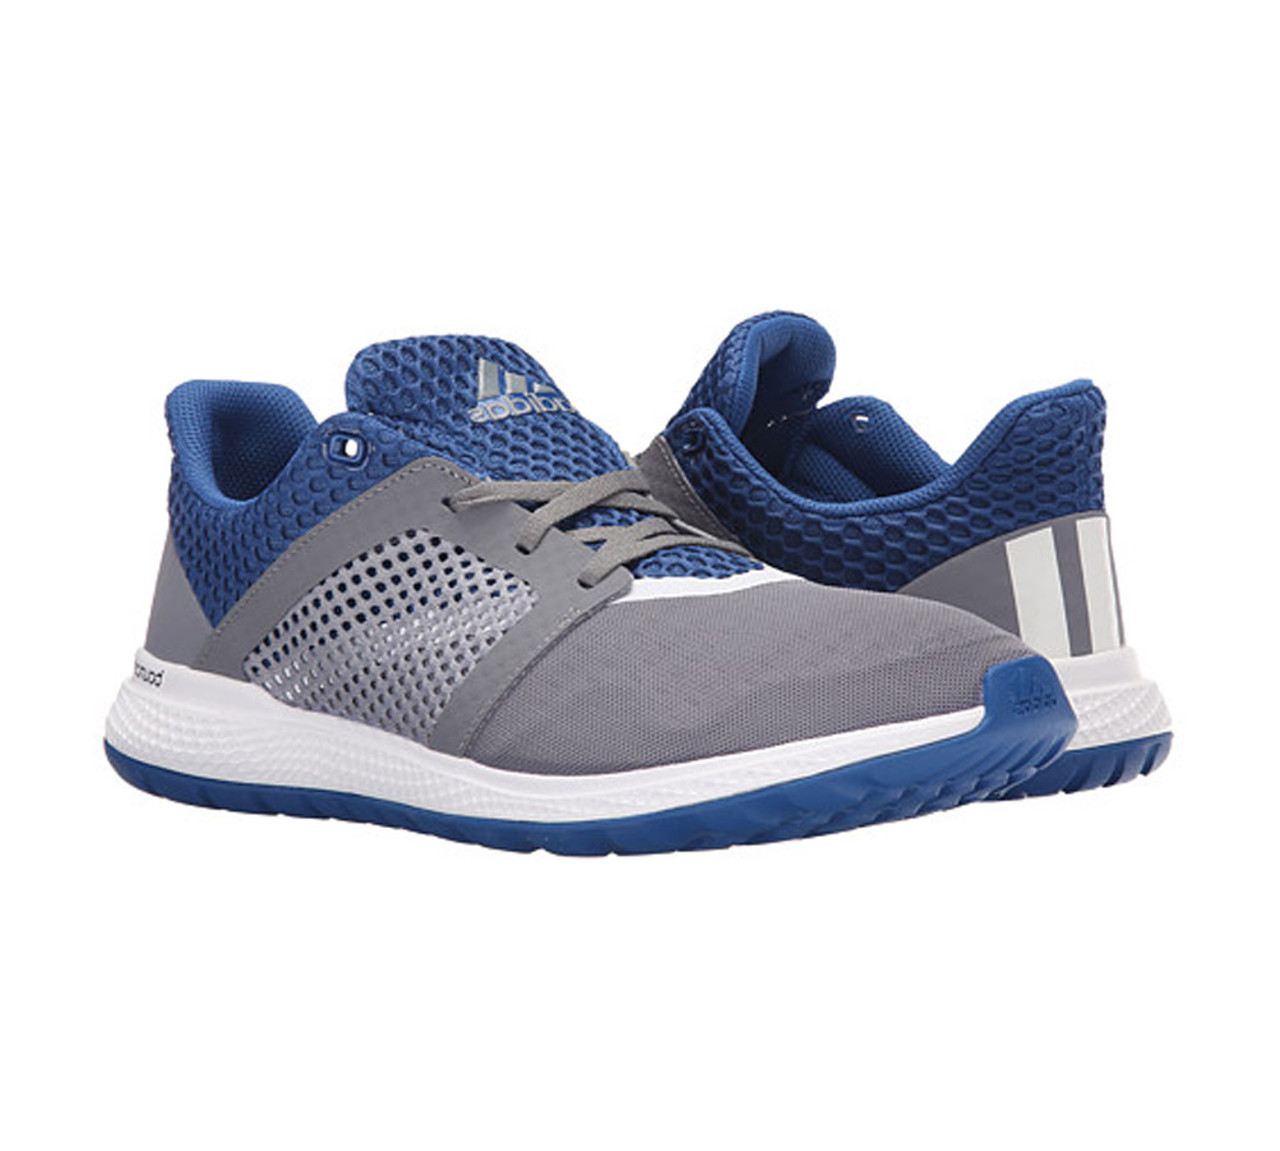 Adidas Men's Energy Bounce 2 Running Shoe - Grey | Discount Adidas Men's  Athletic Shoes & More - Shoolu.com | Shoolu.com